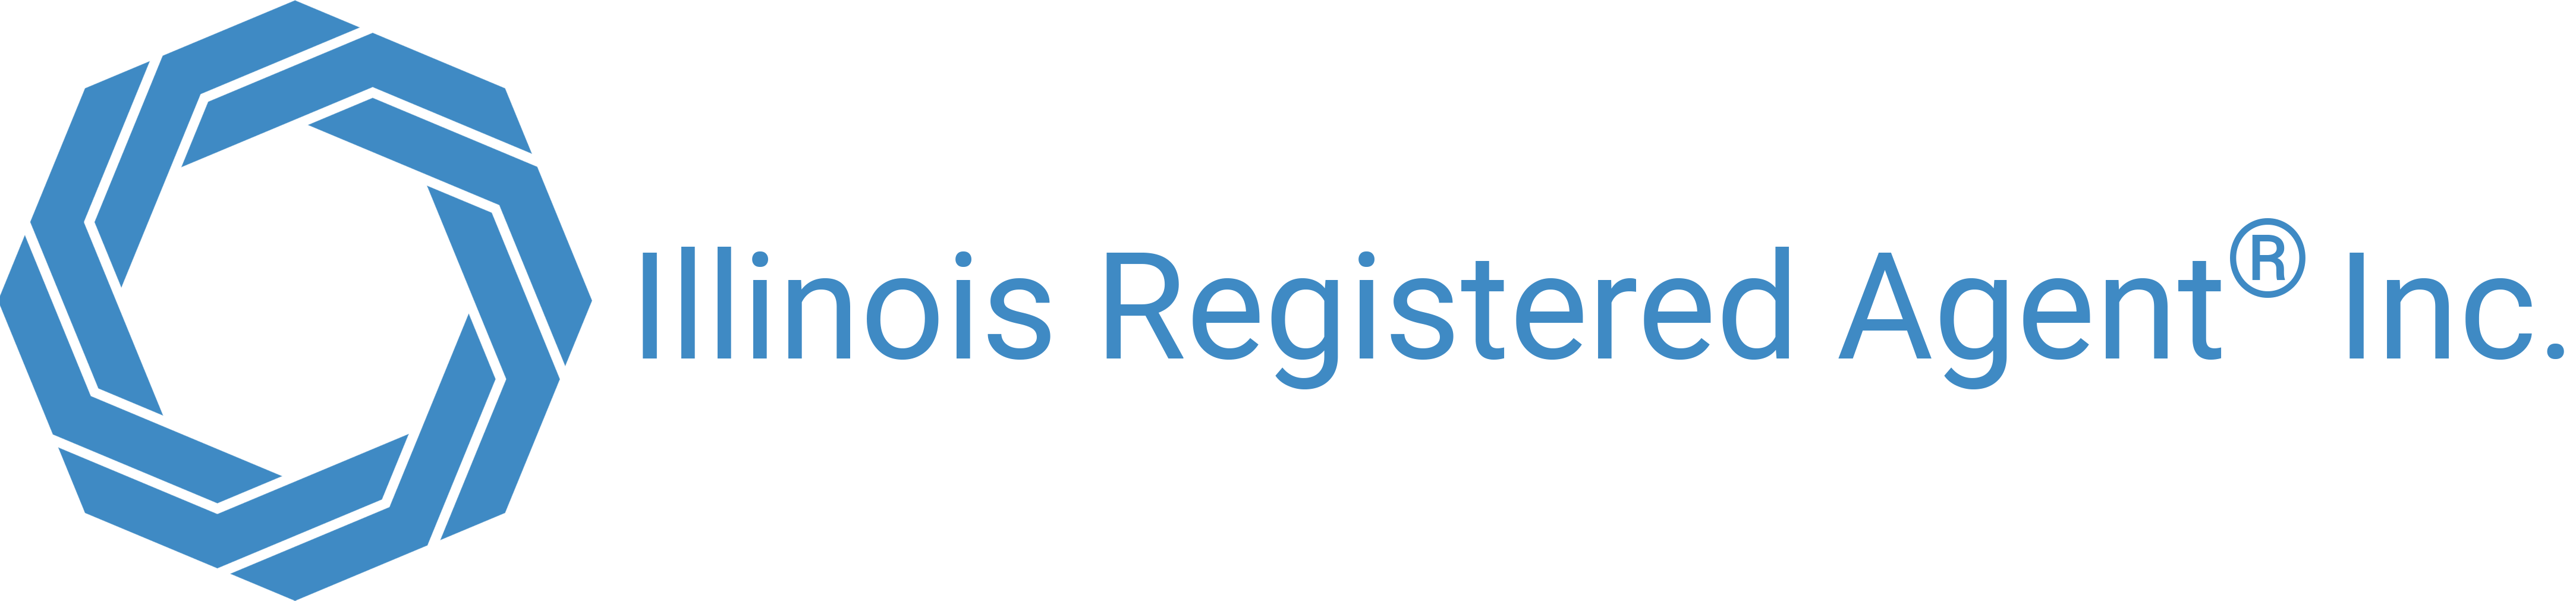 Illinois Registered Agent ® Inc.